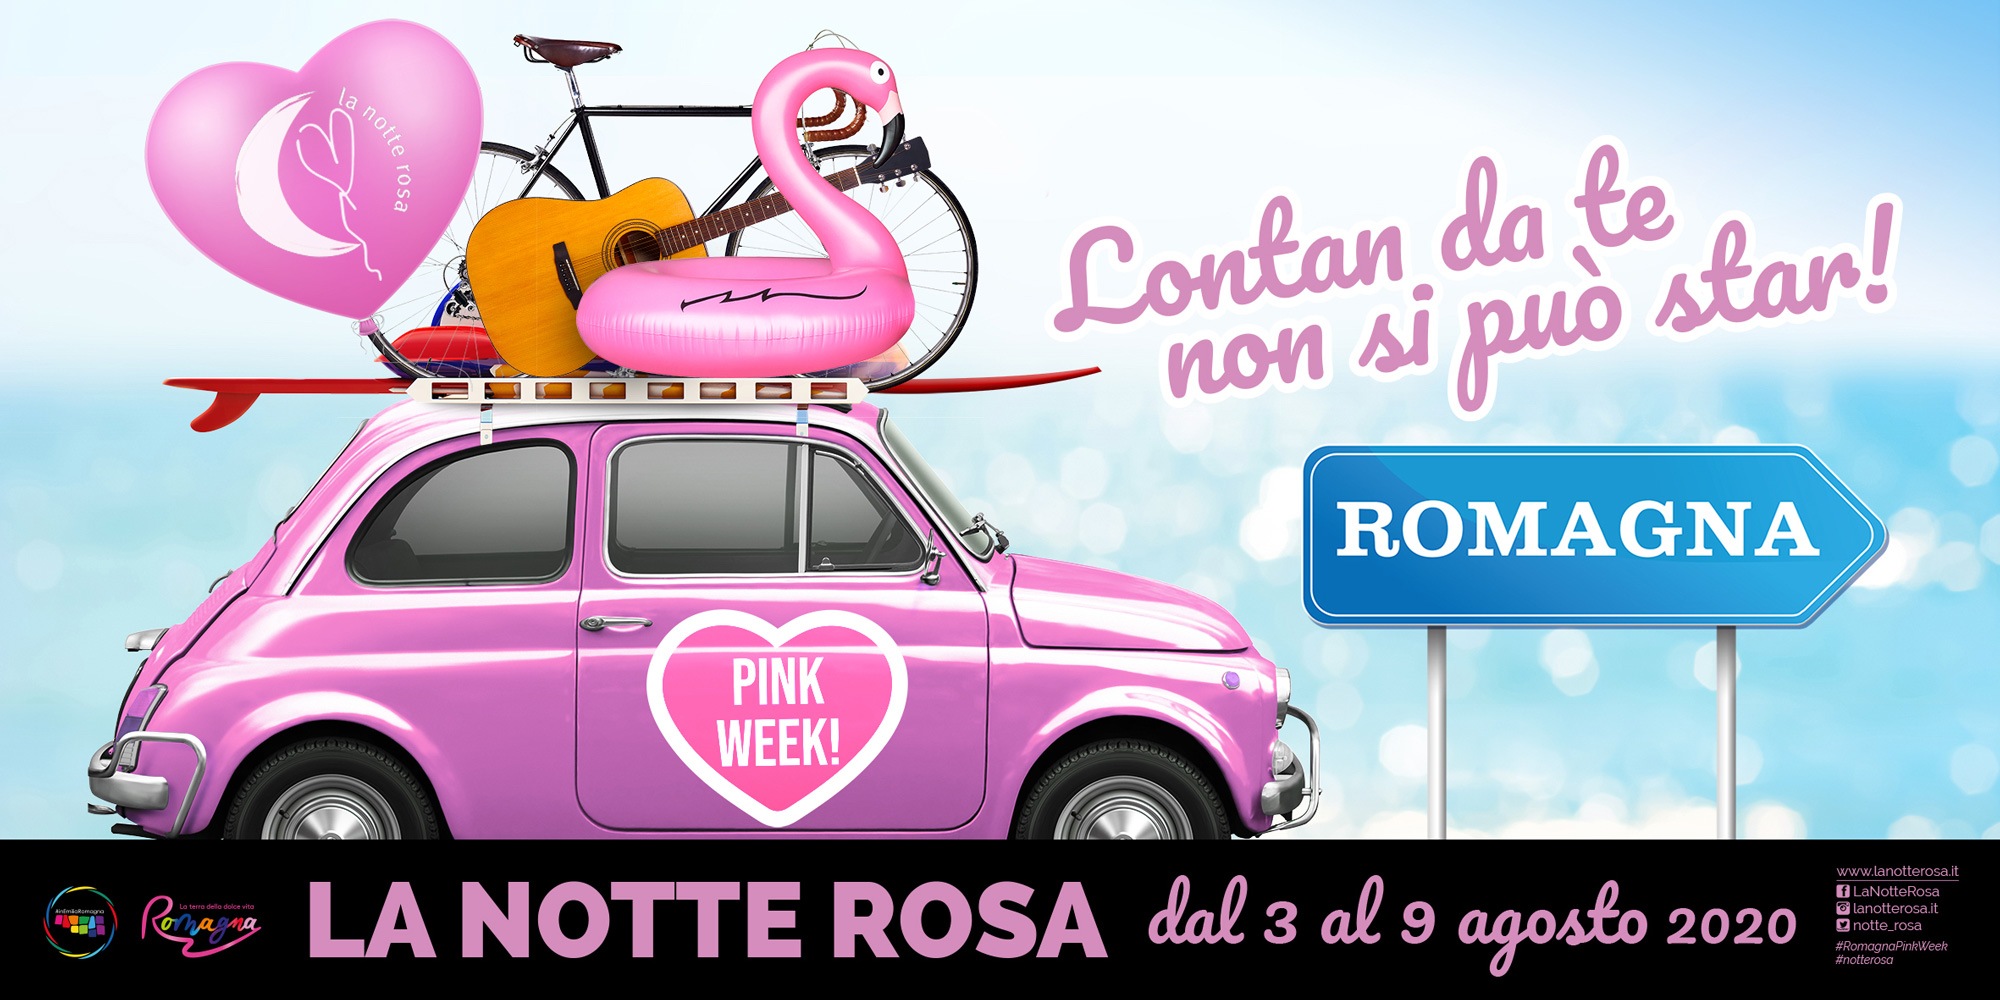 LA NOTTE ROSA - PINK WEEK